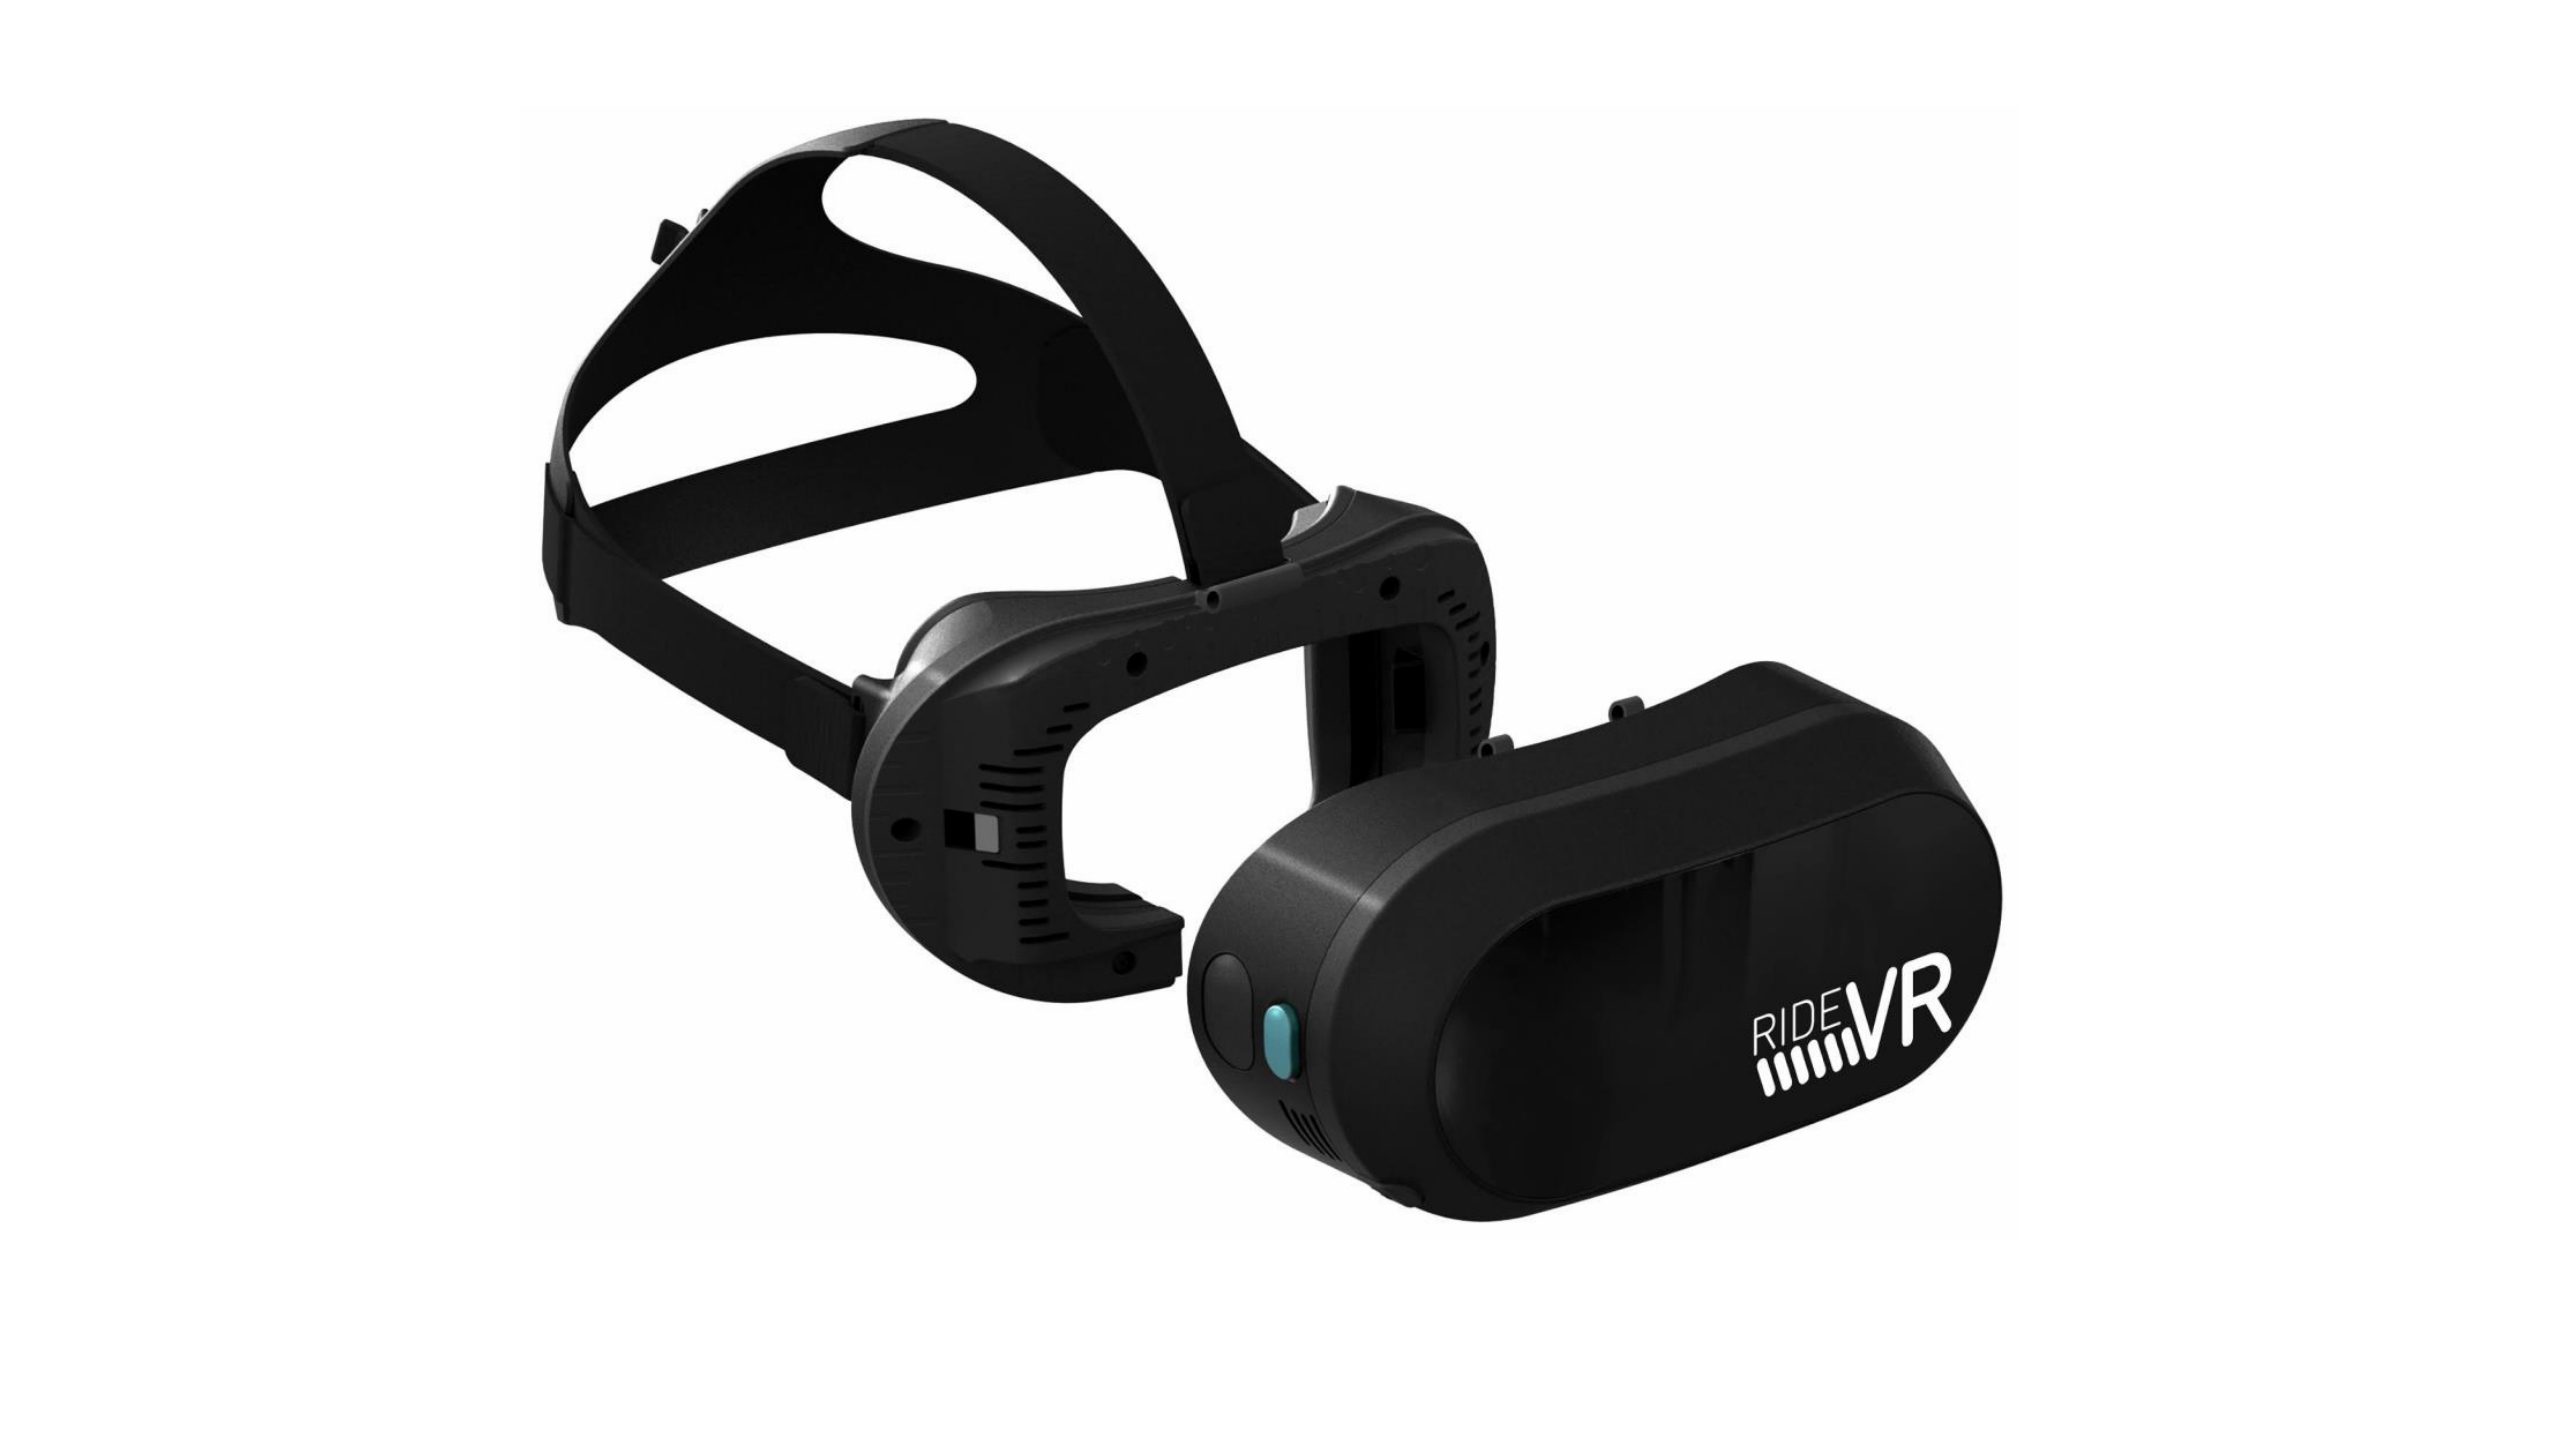 Vr ride. VR очки. Для VR очков горки. VR Goggles. VR очки арт.